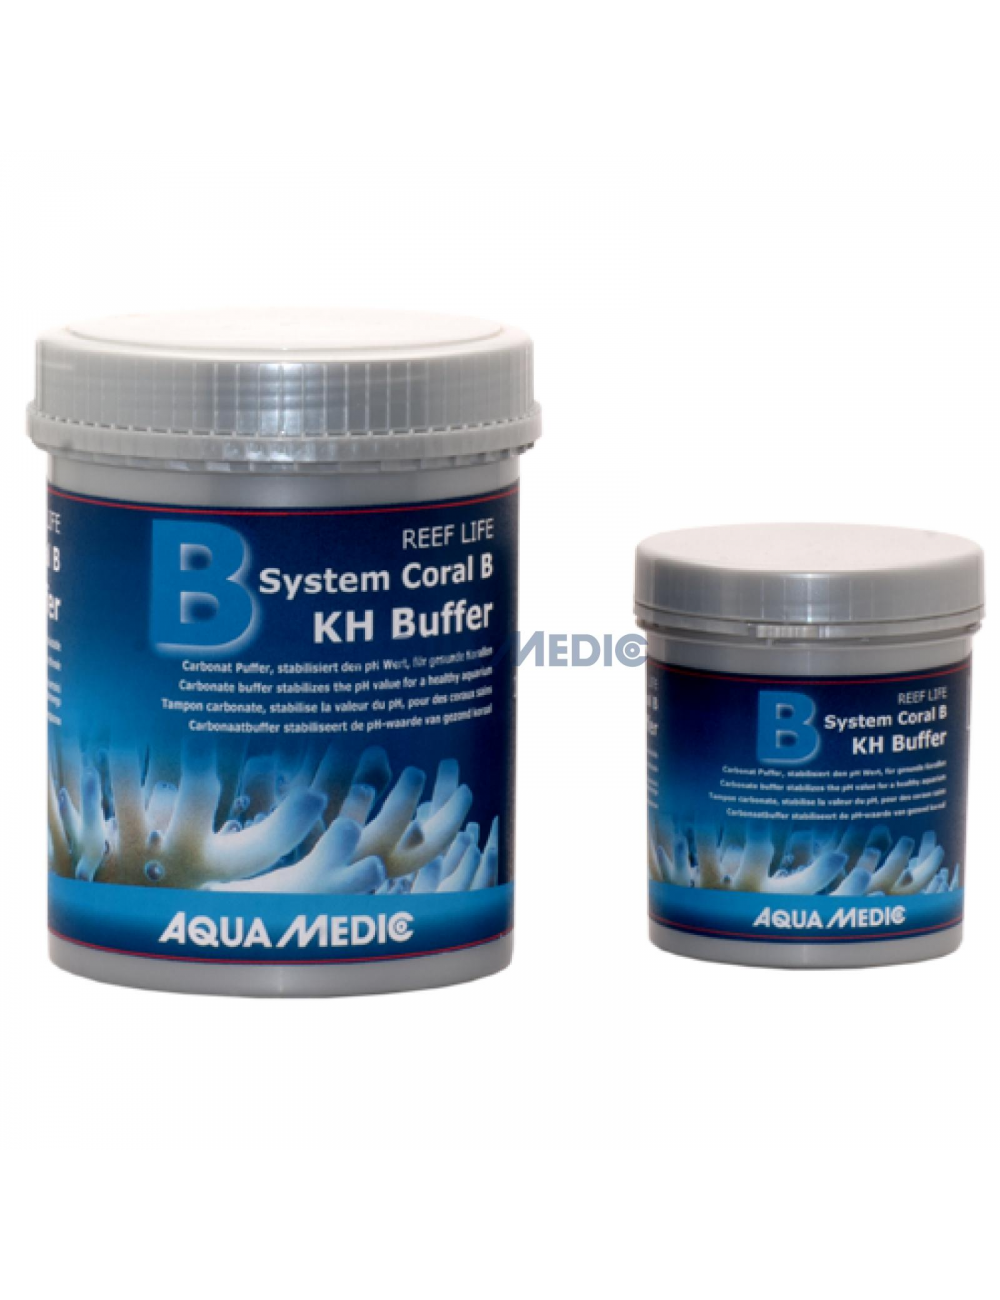 AQUA-MEDIC - REEF LIFE System Coral B KH Buffer - 1000gr